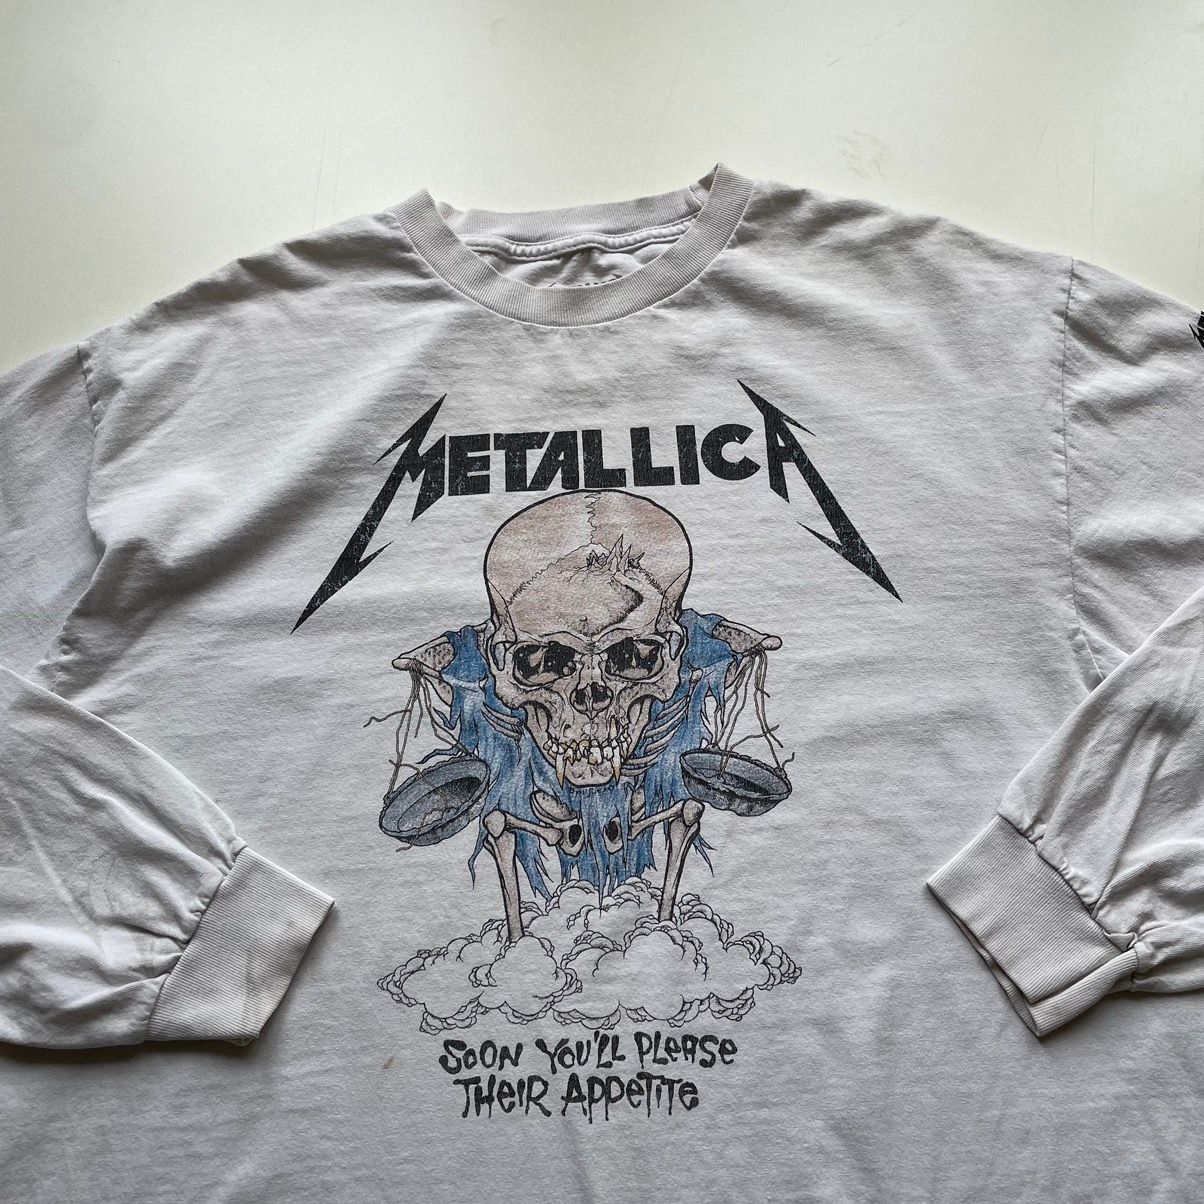 Vintage Vintage 2000s Metallica Graphic Long Sleeve Shirt XL Rare Size US XL / EU 56 / 4 - 2 Preview